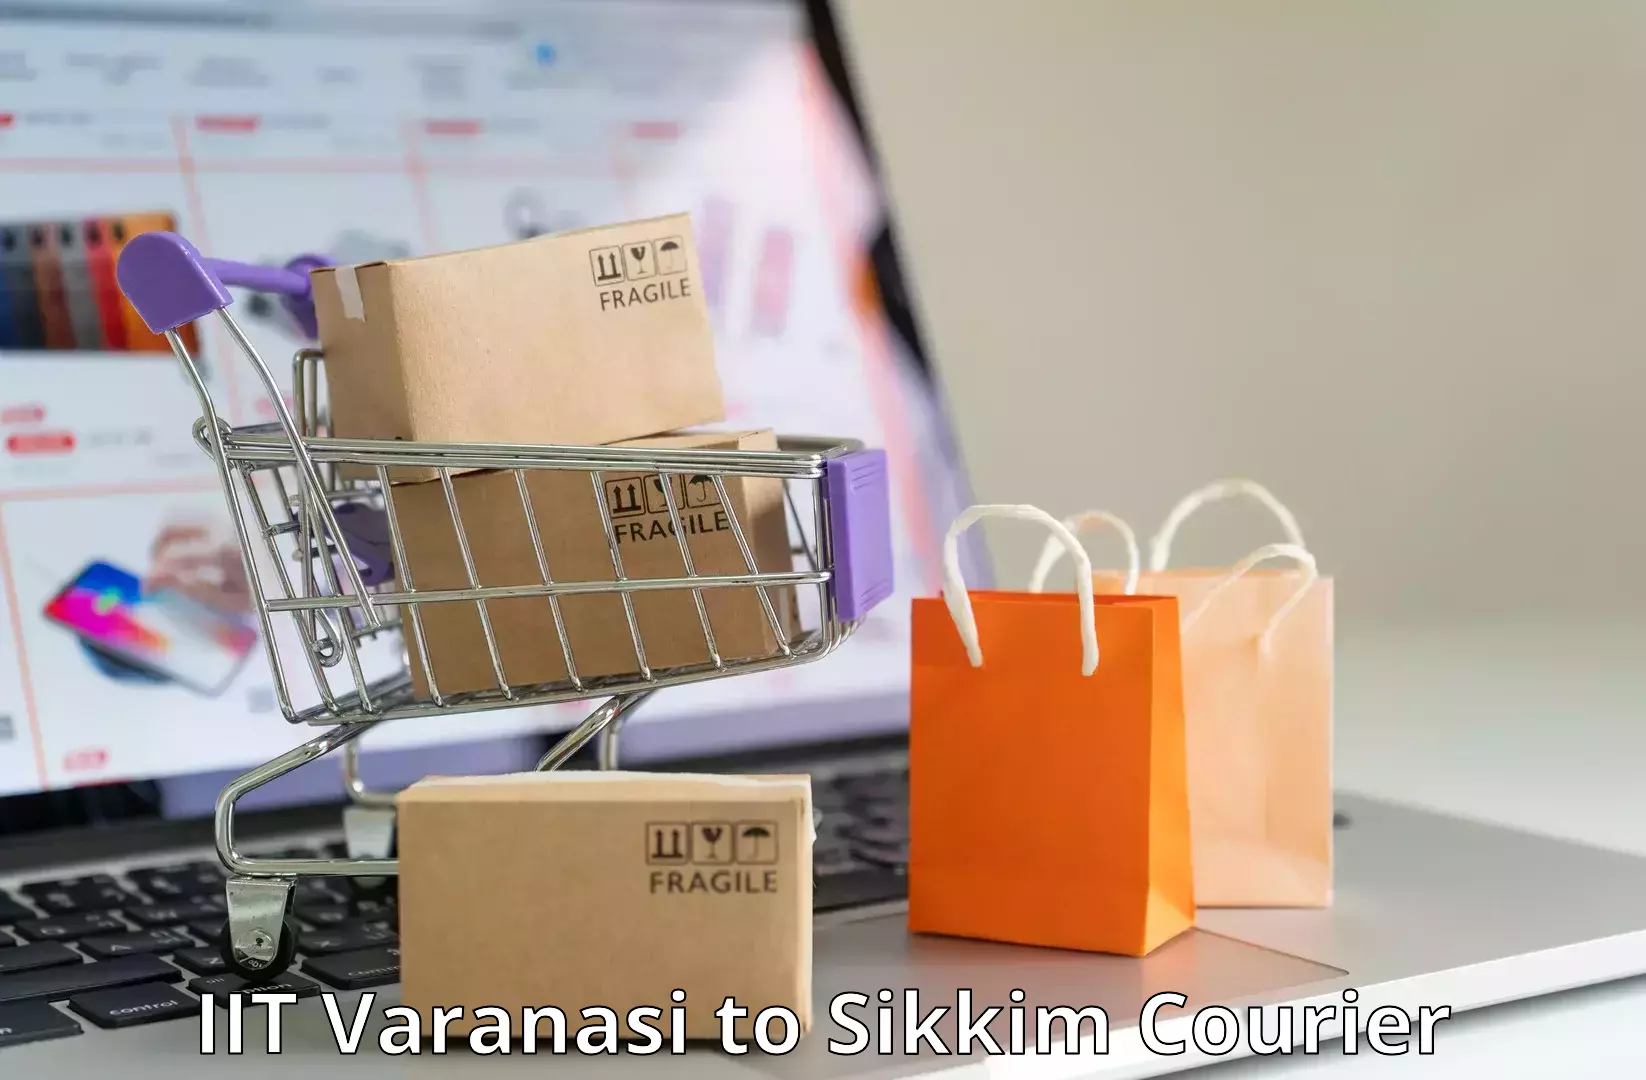 Courier service comparison IIT Varanasi to Geyzing